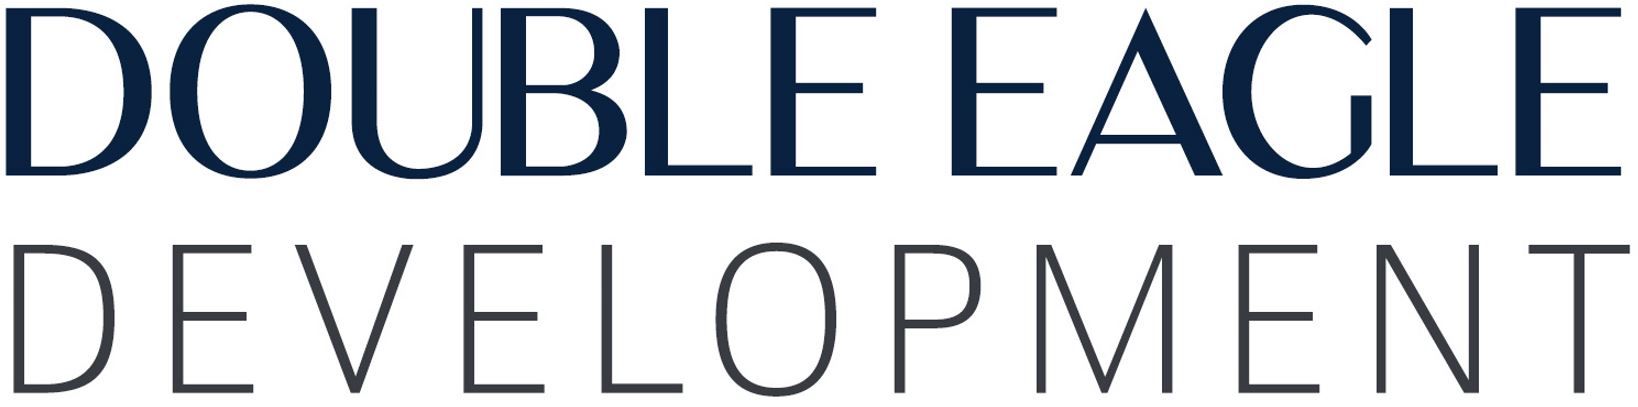 Double Eagle Development logo.JPG